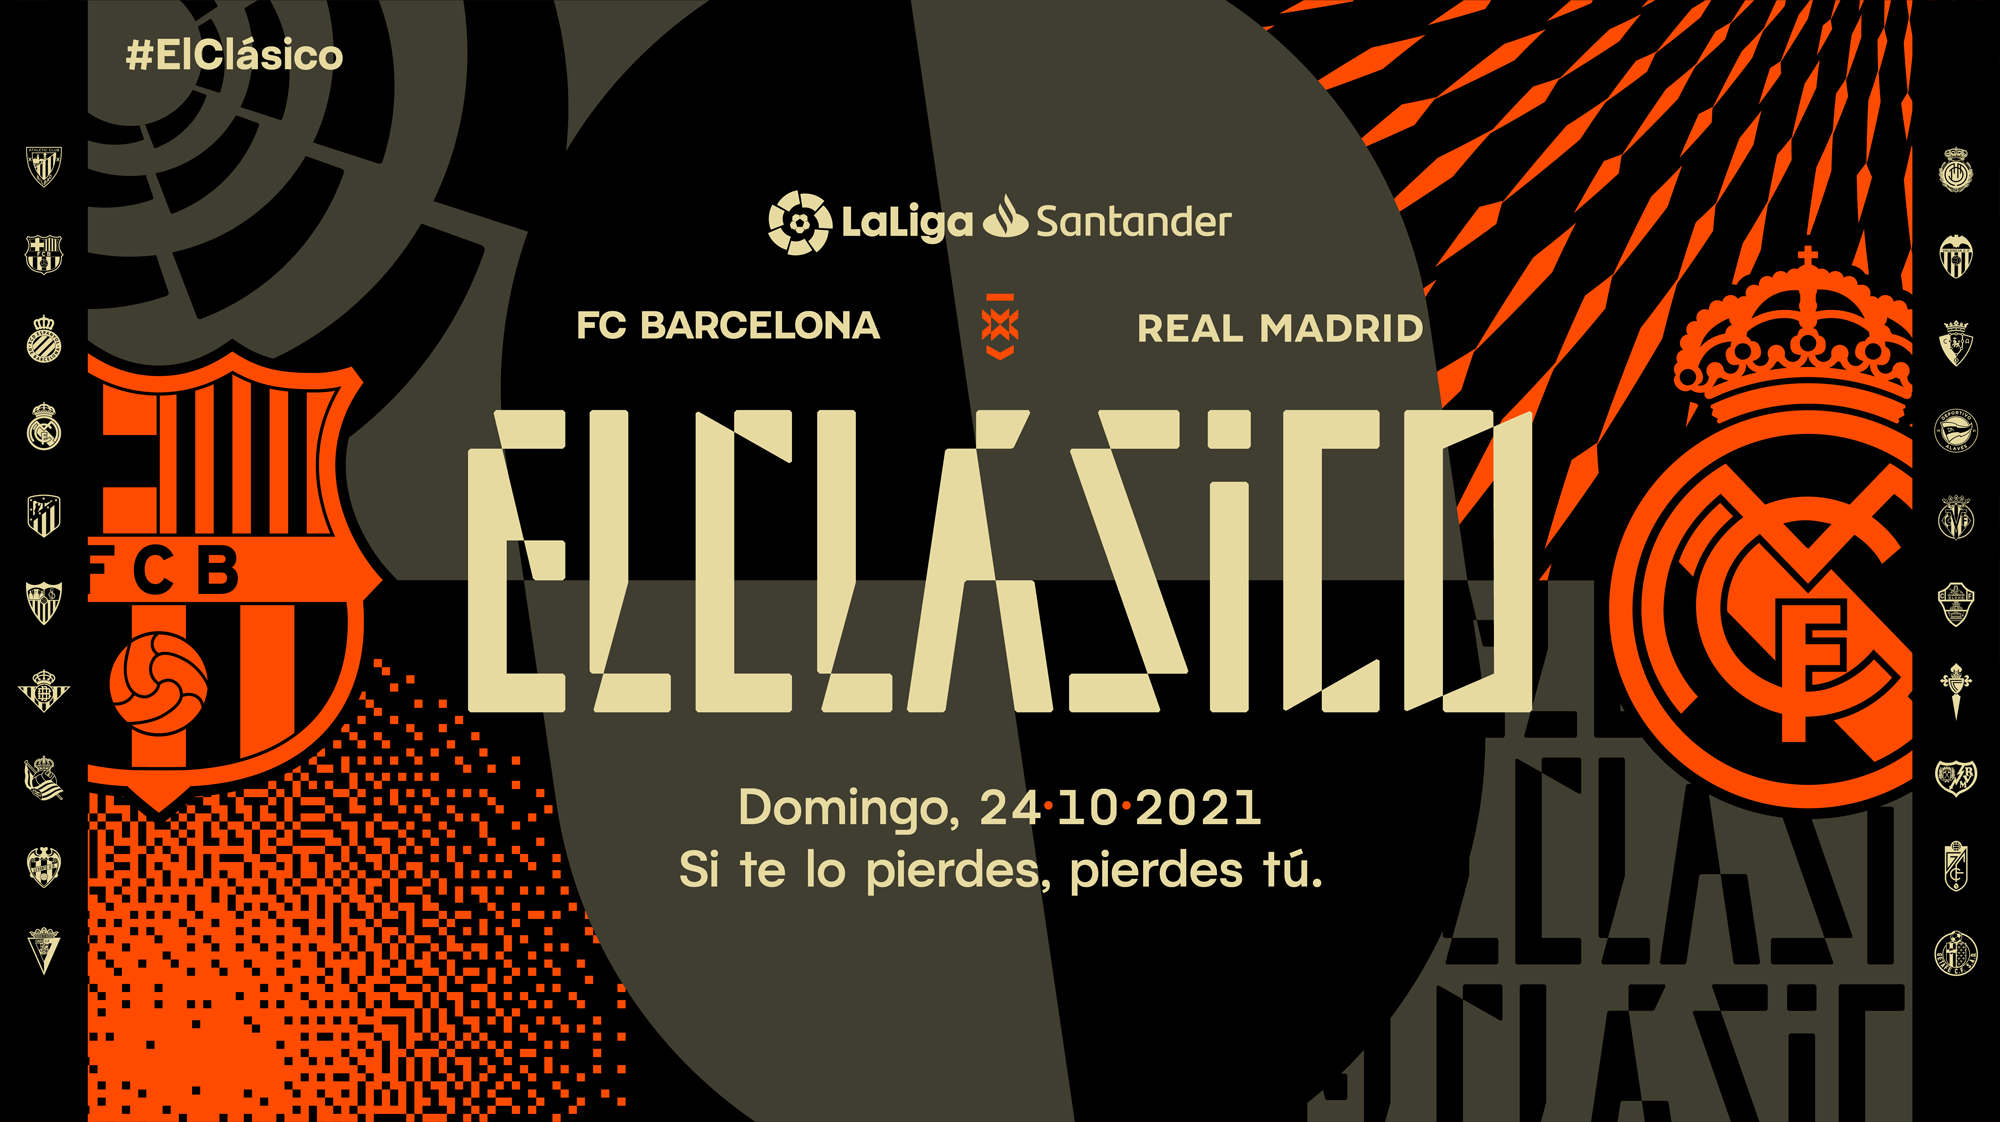 New Logo and Identity for ElClásico by Vasava